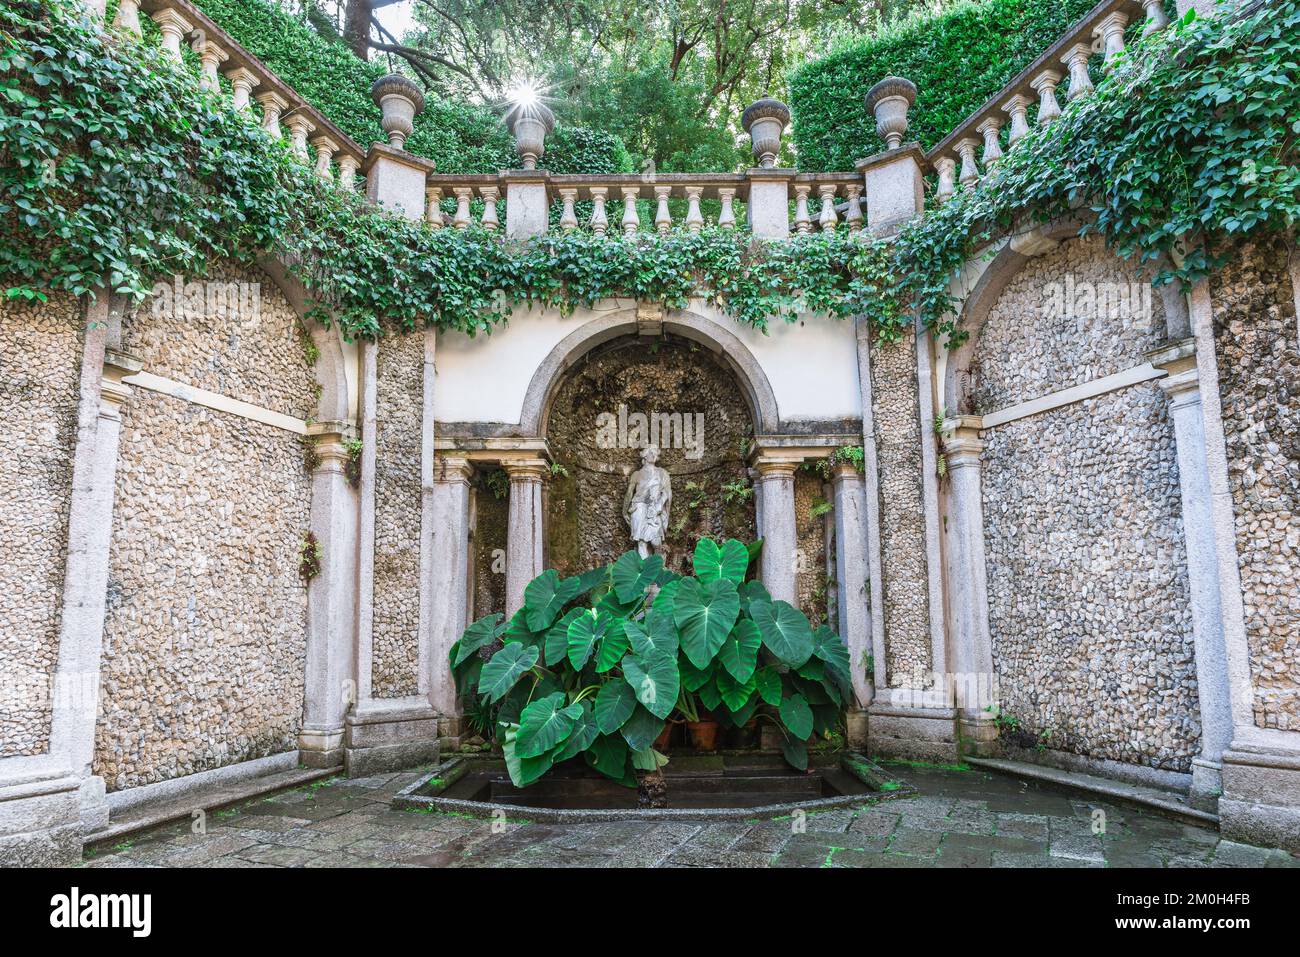 Atrio di Diana, view of the Atrium Of Diana - a neoclassical space in the Isola Bella gardens, Isole Borromee, Piedmont, Italy Stock Photo